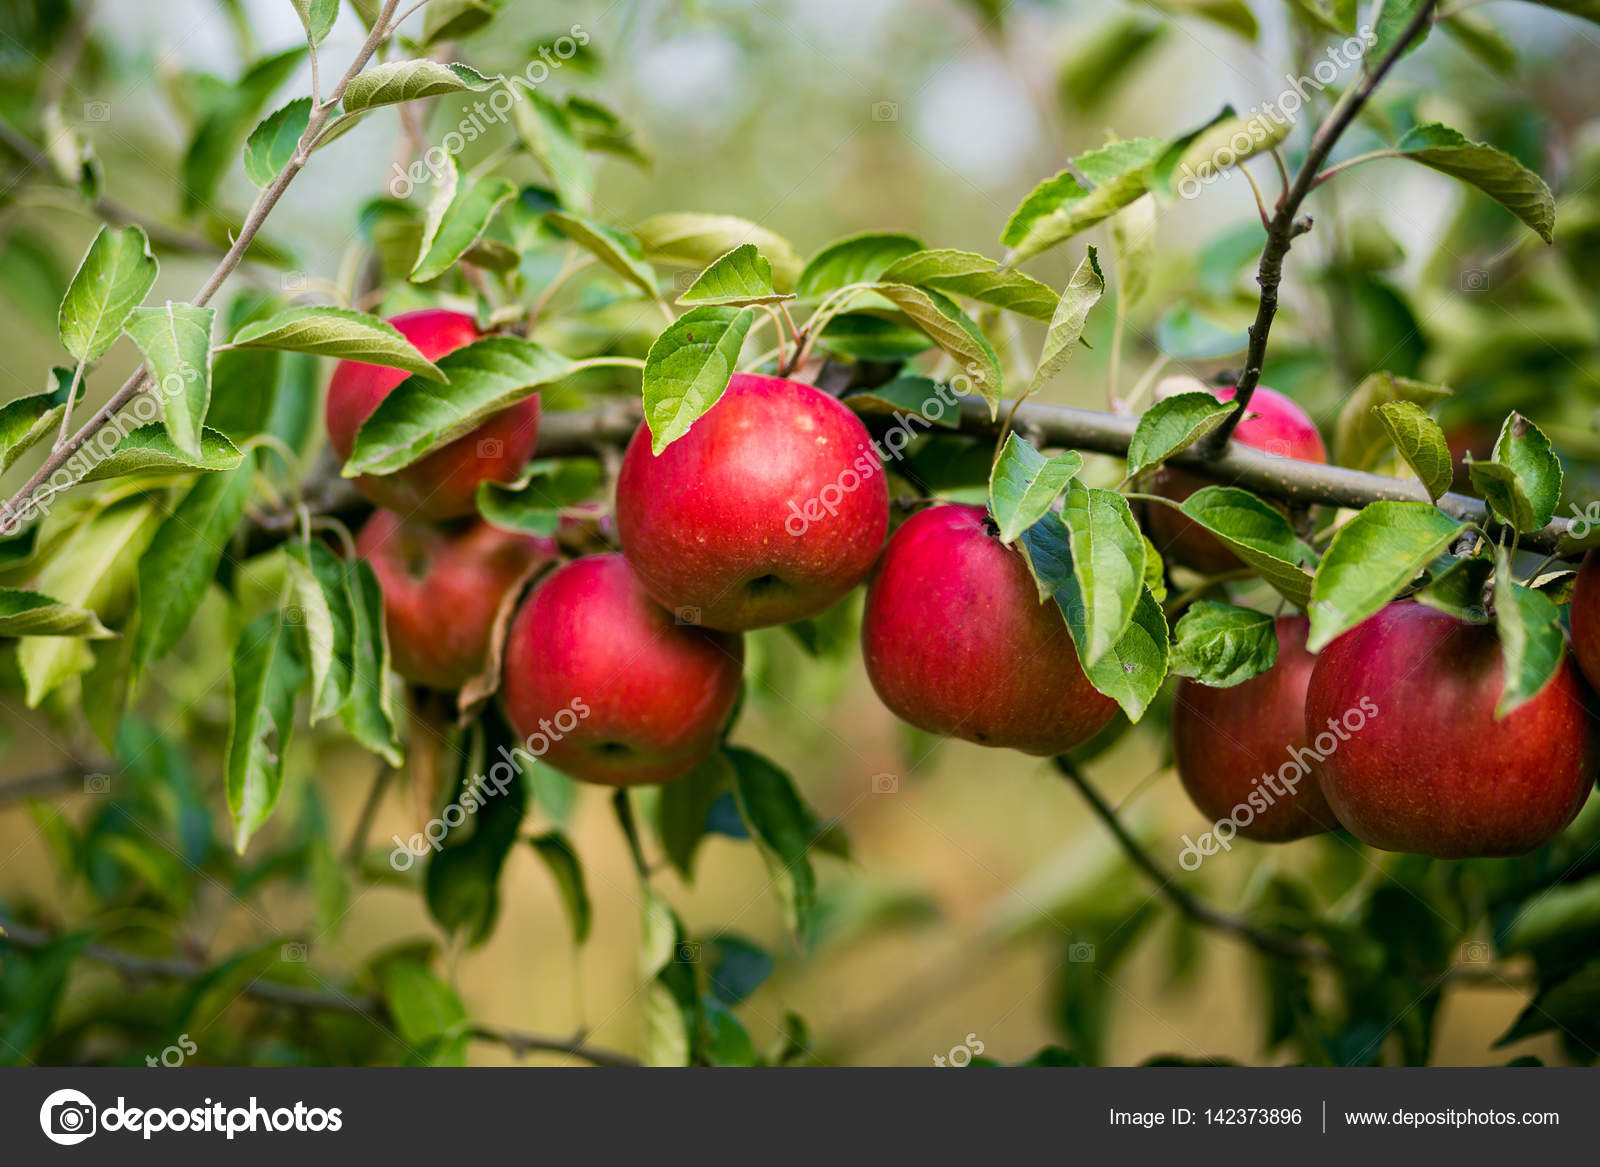 https://st3.depositphotos.com/8000700/14237/i/1600/depositphotos_142373896-stock-photo-fresh-organic-applesapple-orchardapple-garden.jpg